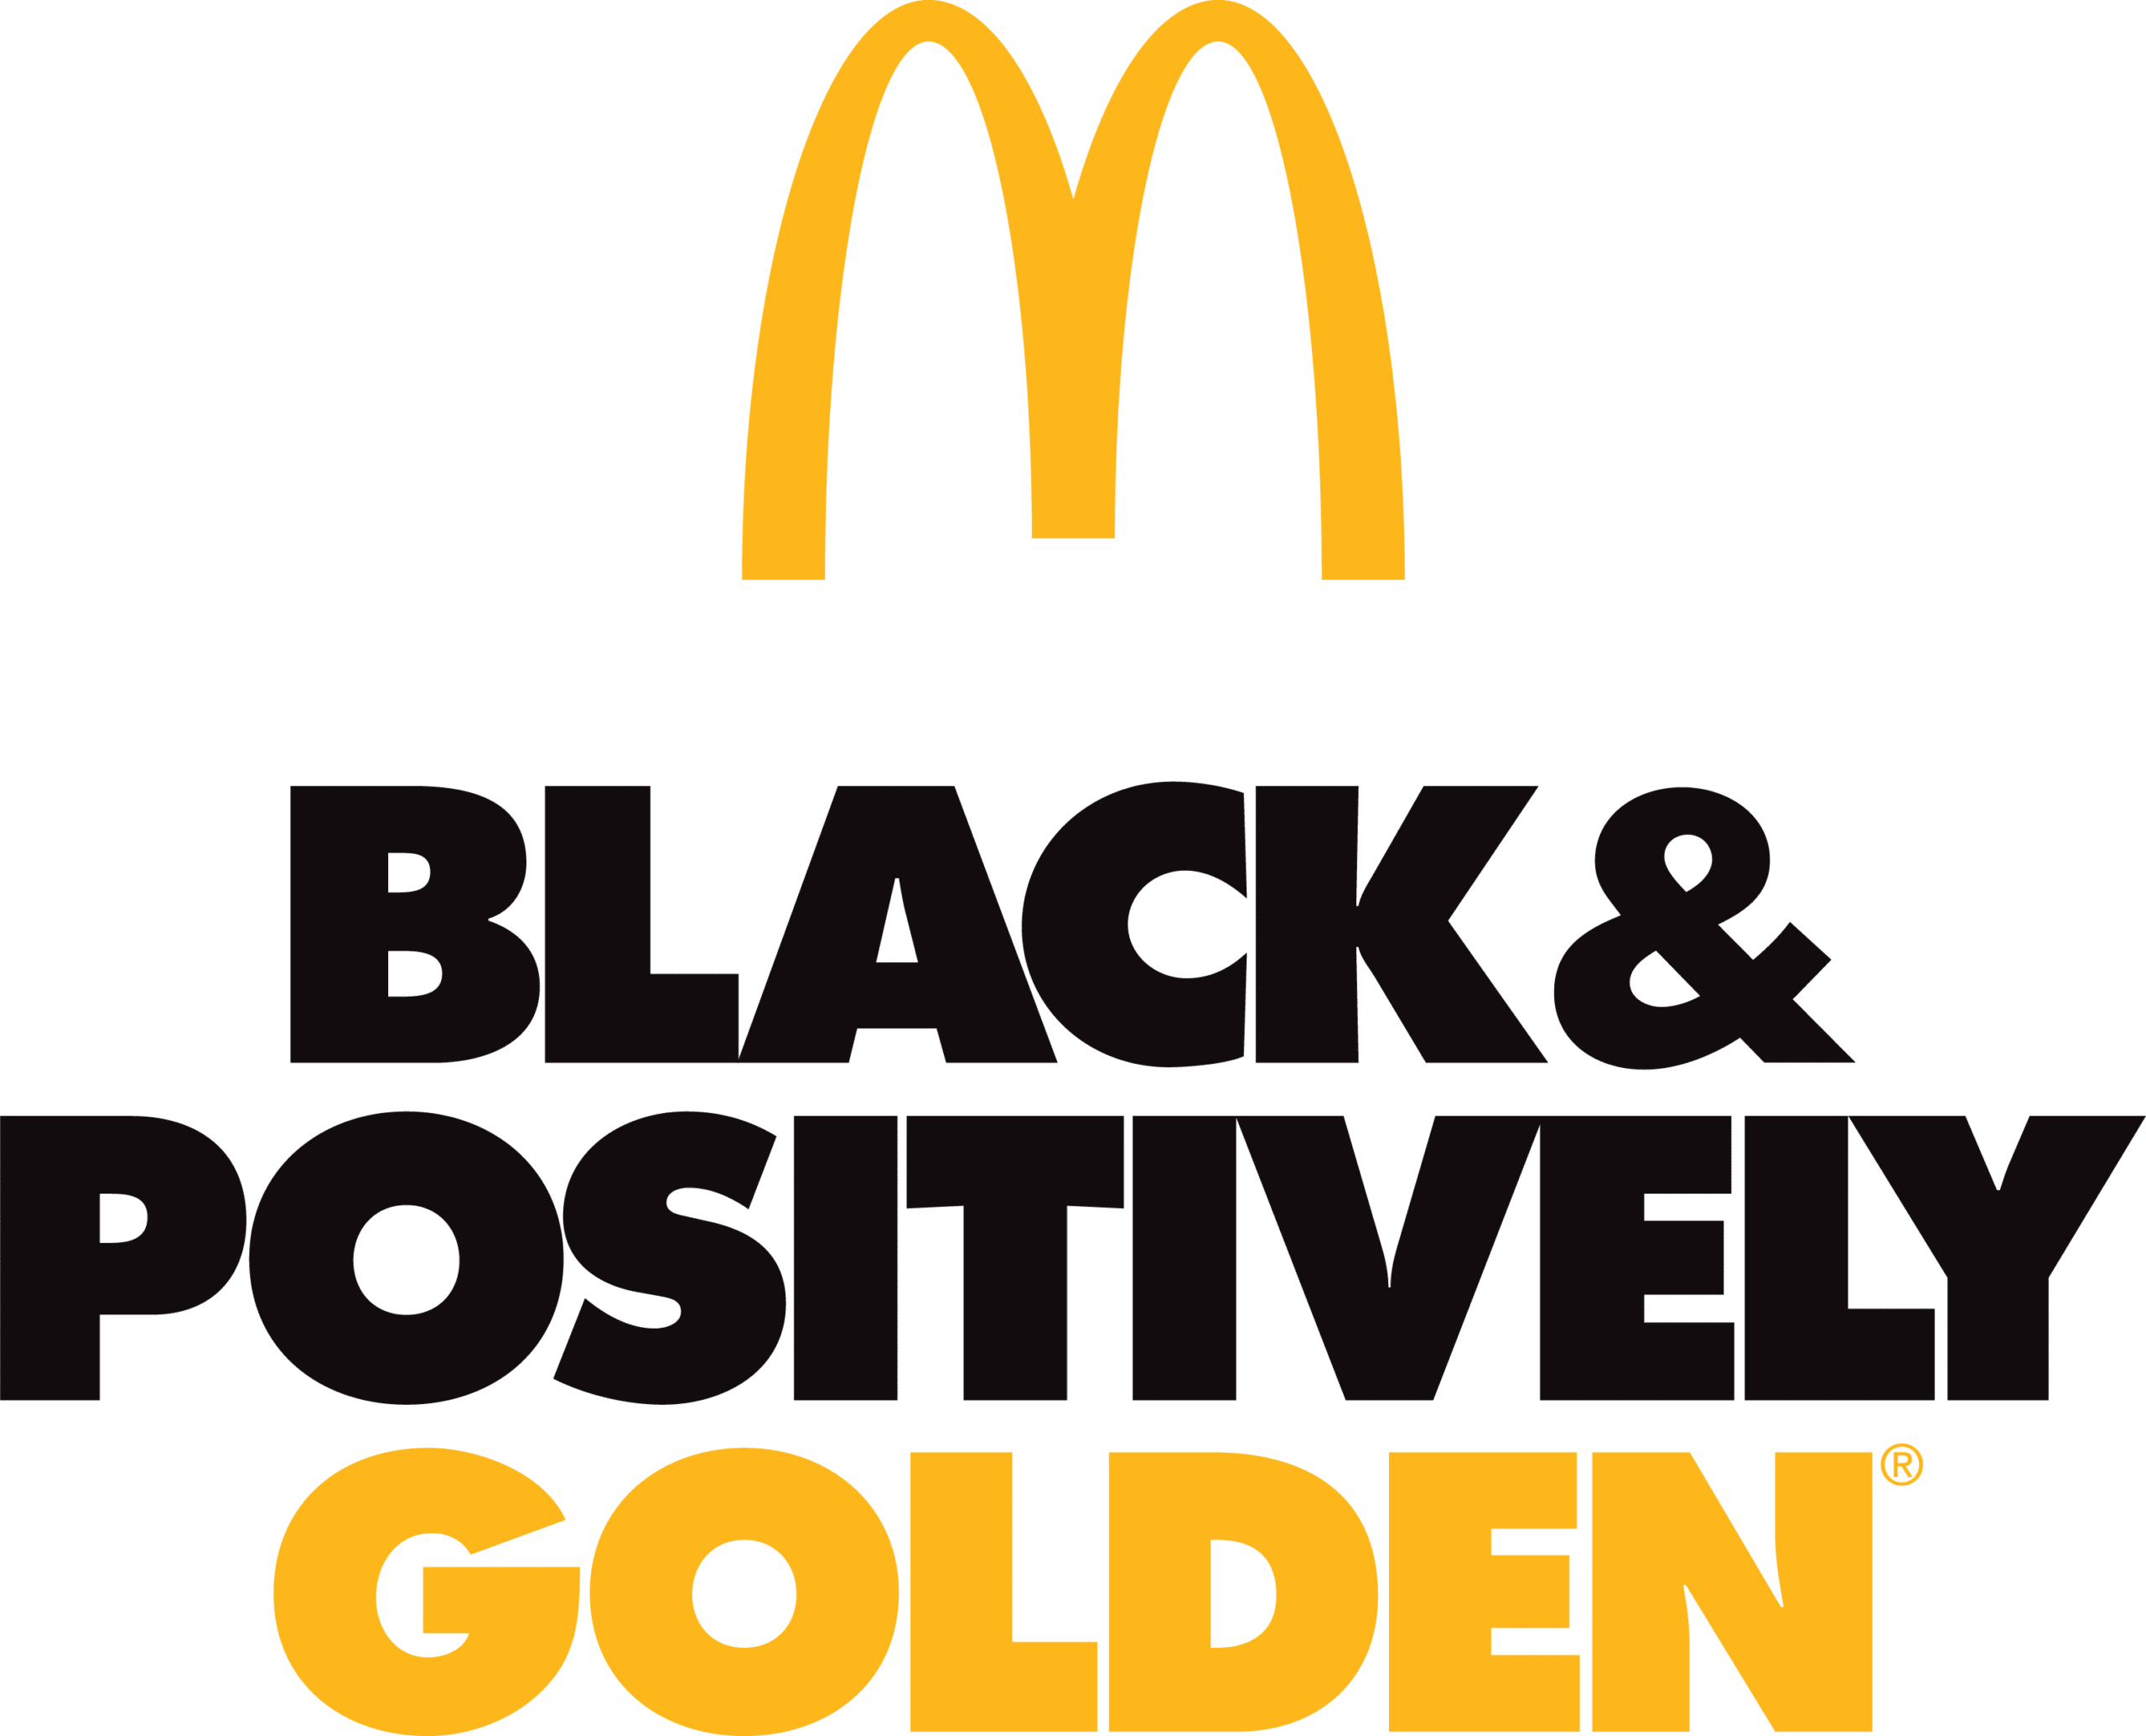 McDonald’s Black & Positively Golden